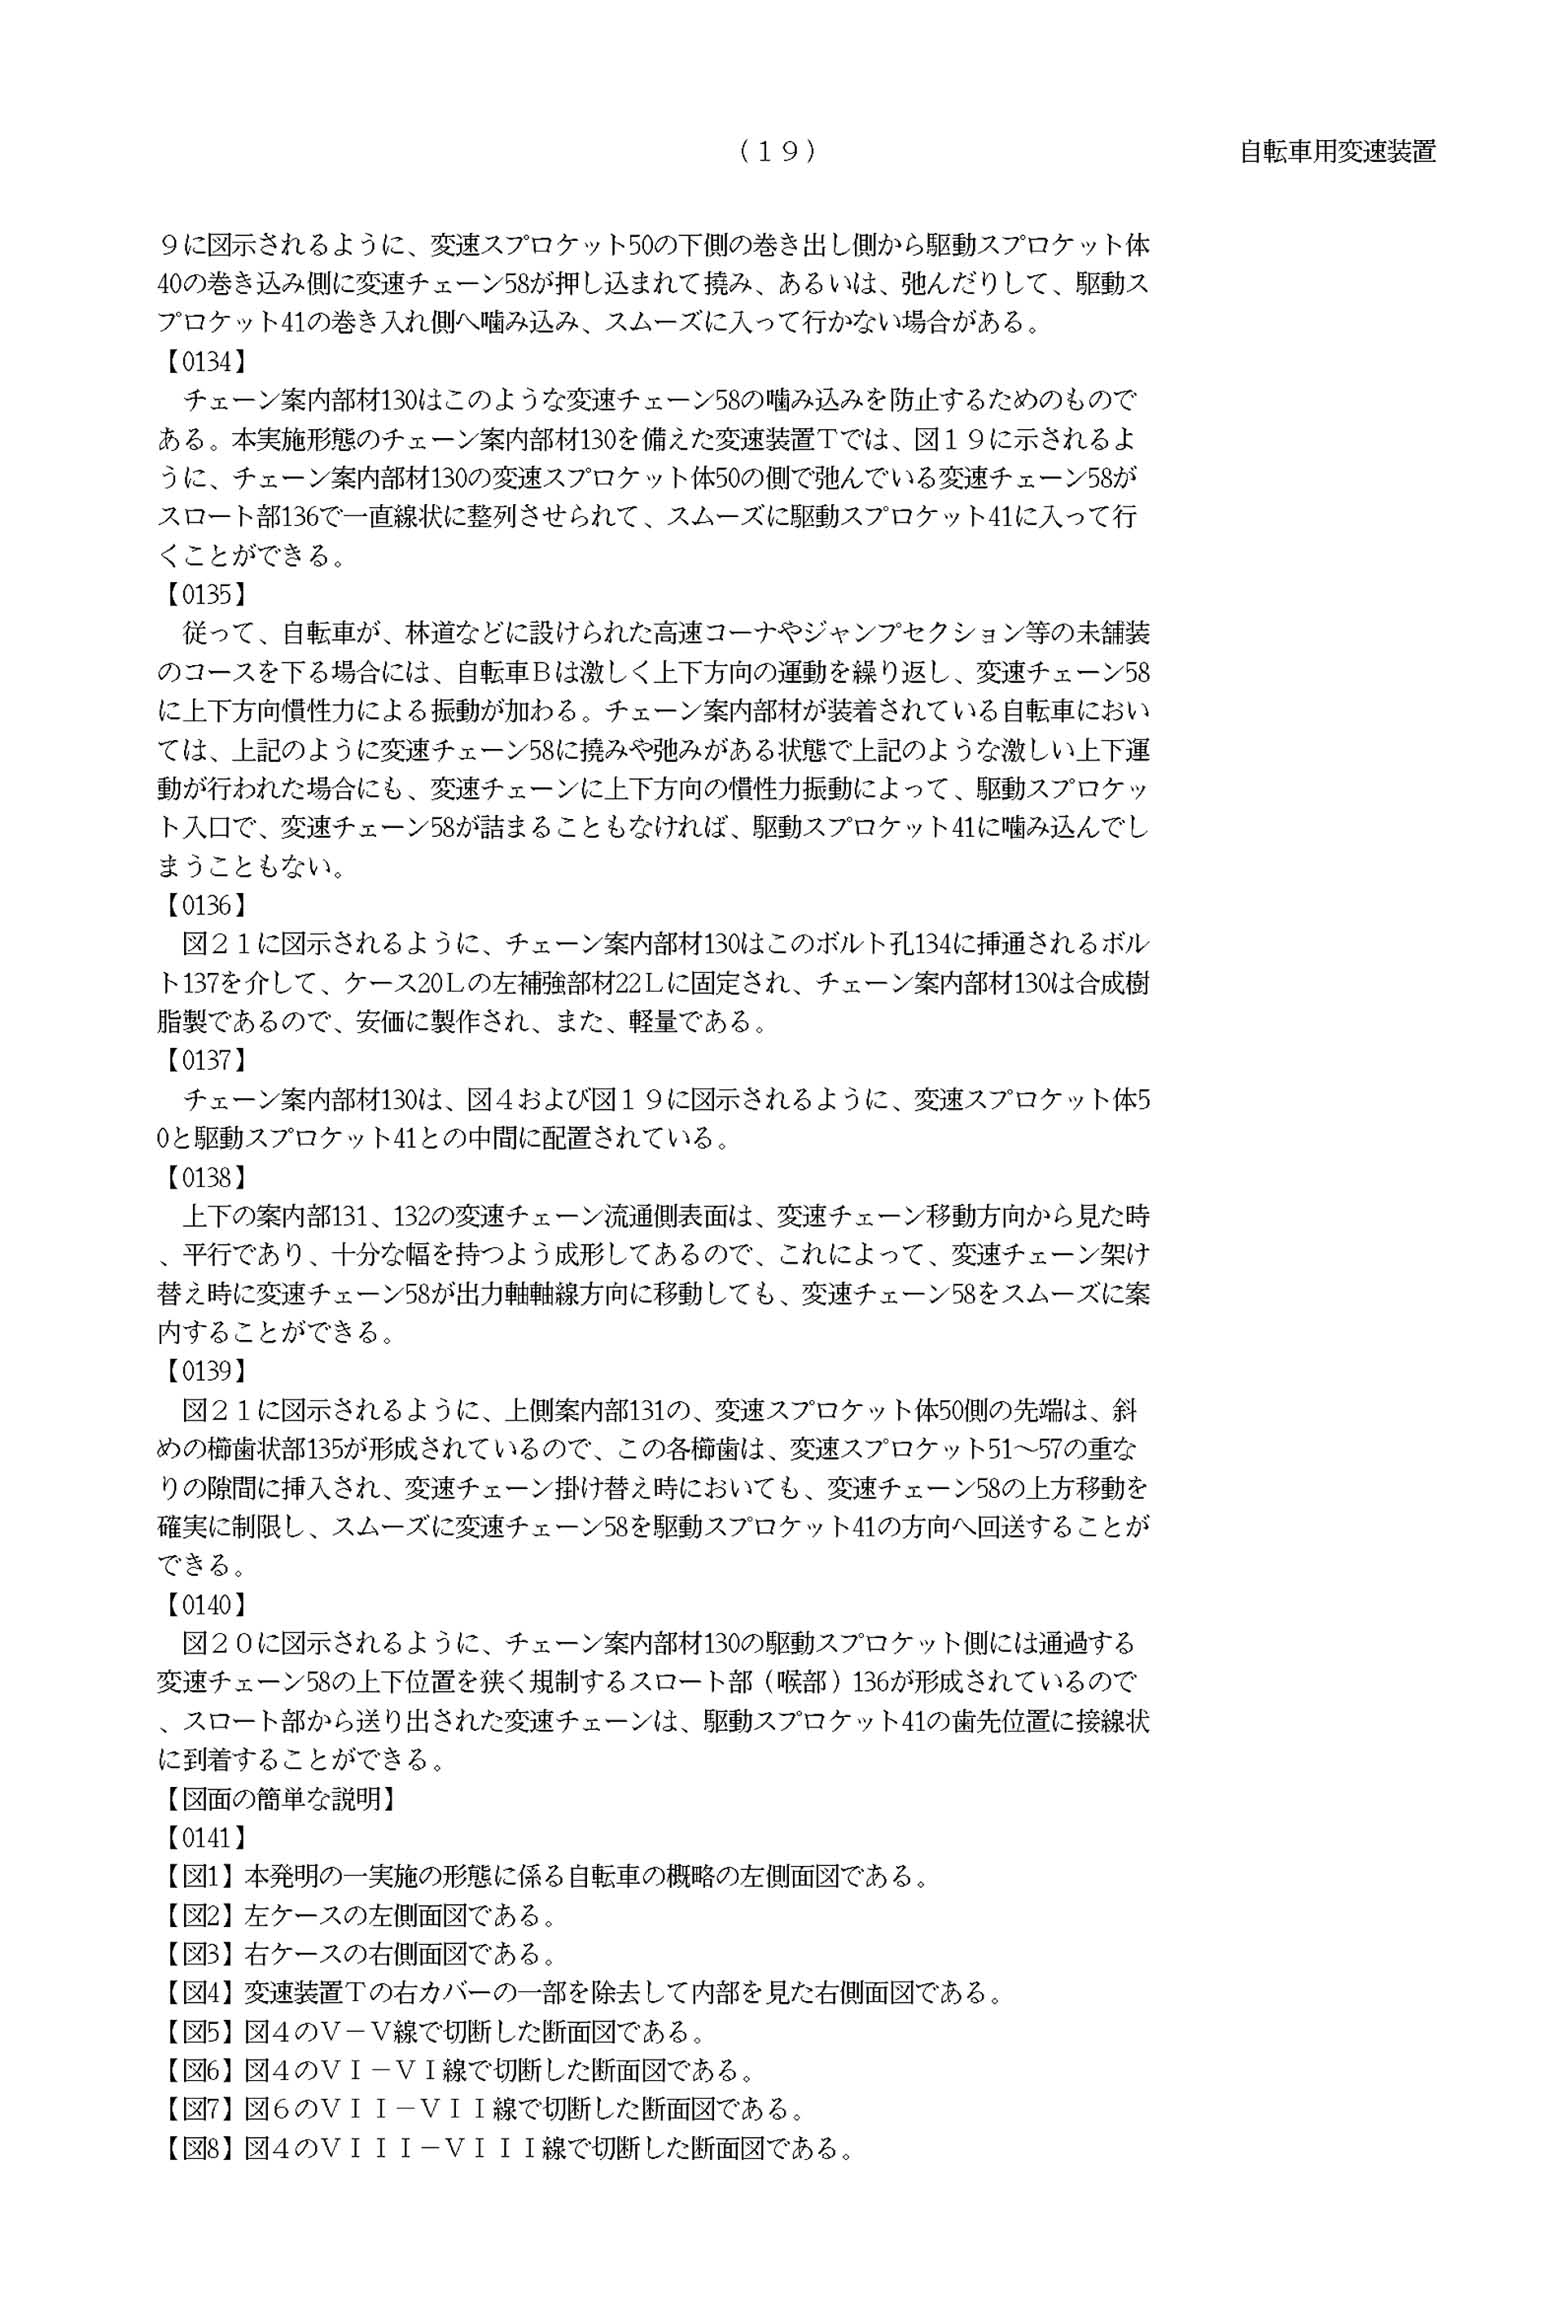 Japanese Patent 4286681 - Honda page 19 main image